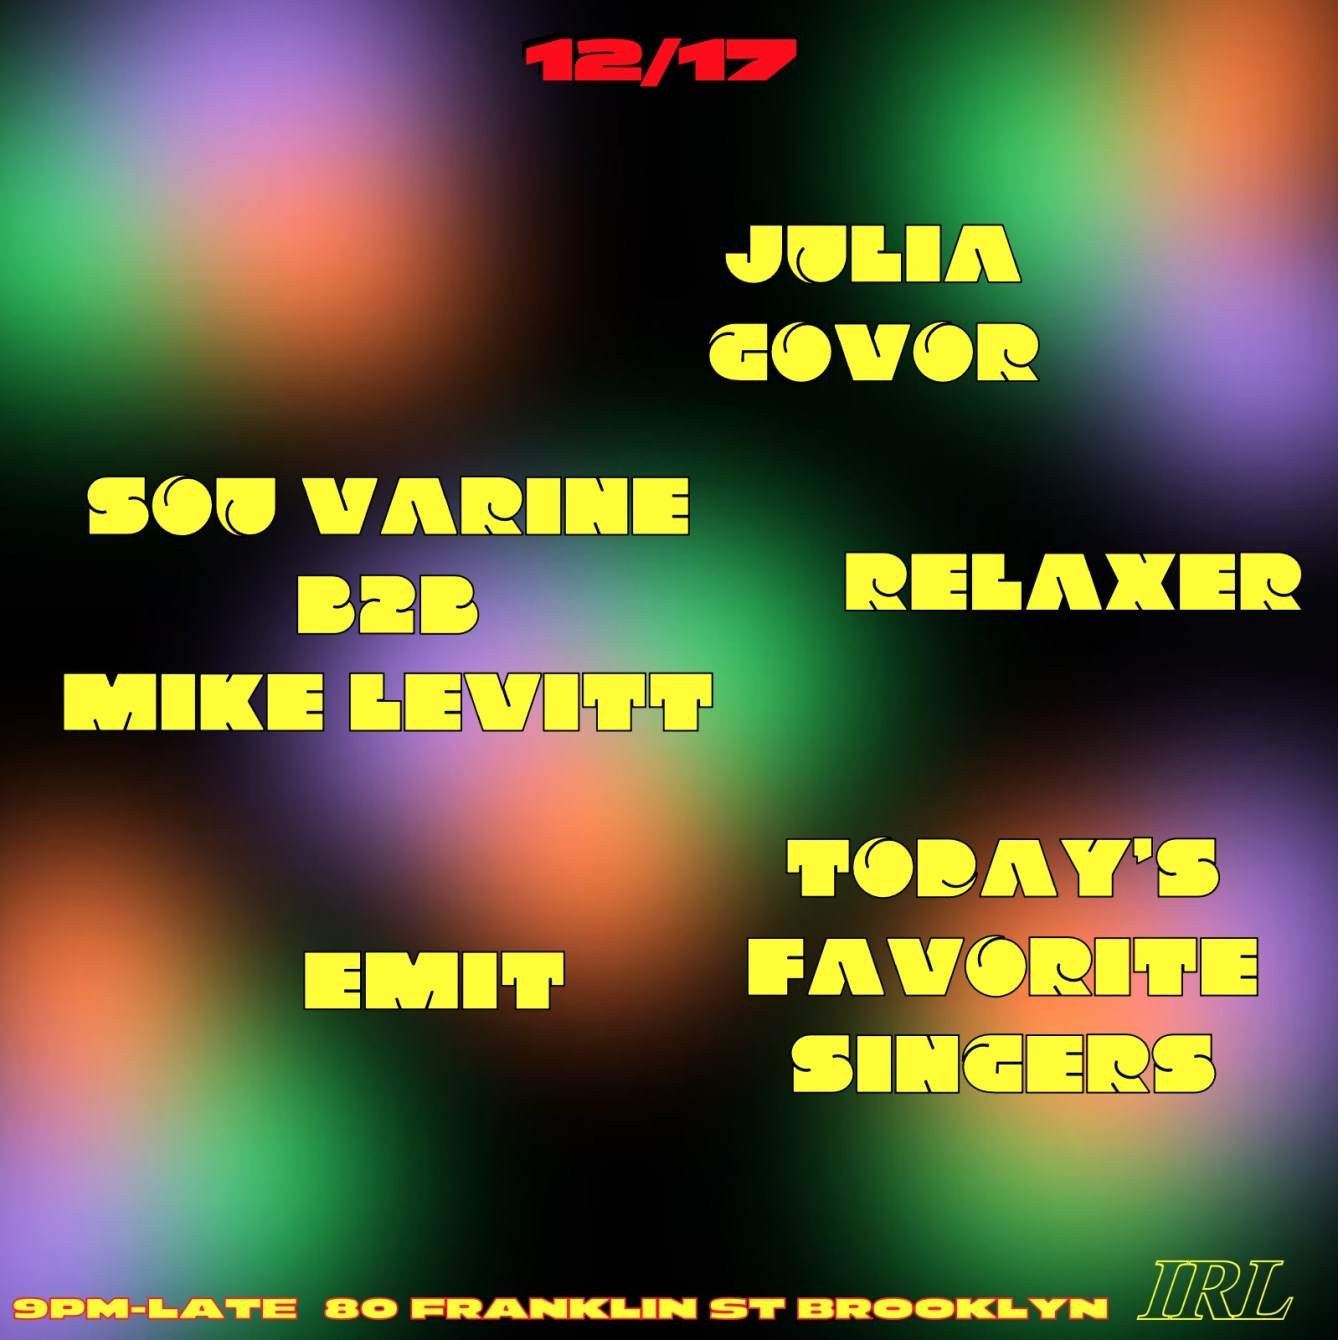 [CANCELLED] Julia Govor, Relaxer, Emit, Sou Varine b2b Mike Levitt, Today's Favorite Singers - フライヤー表